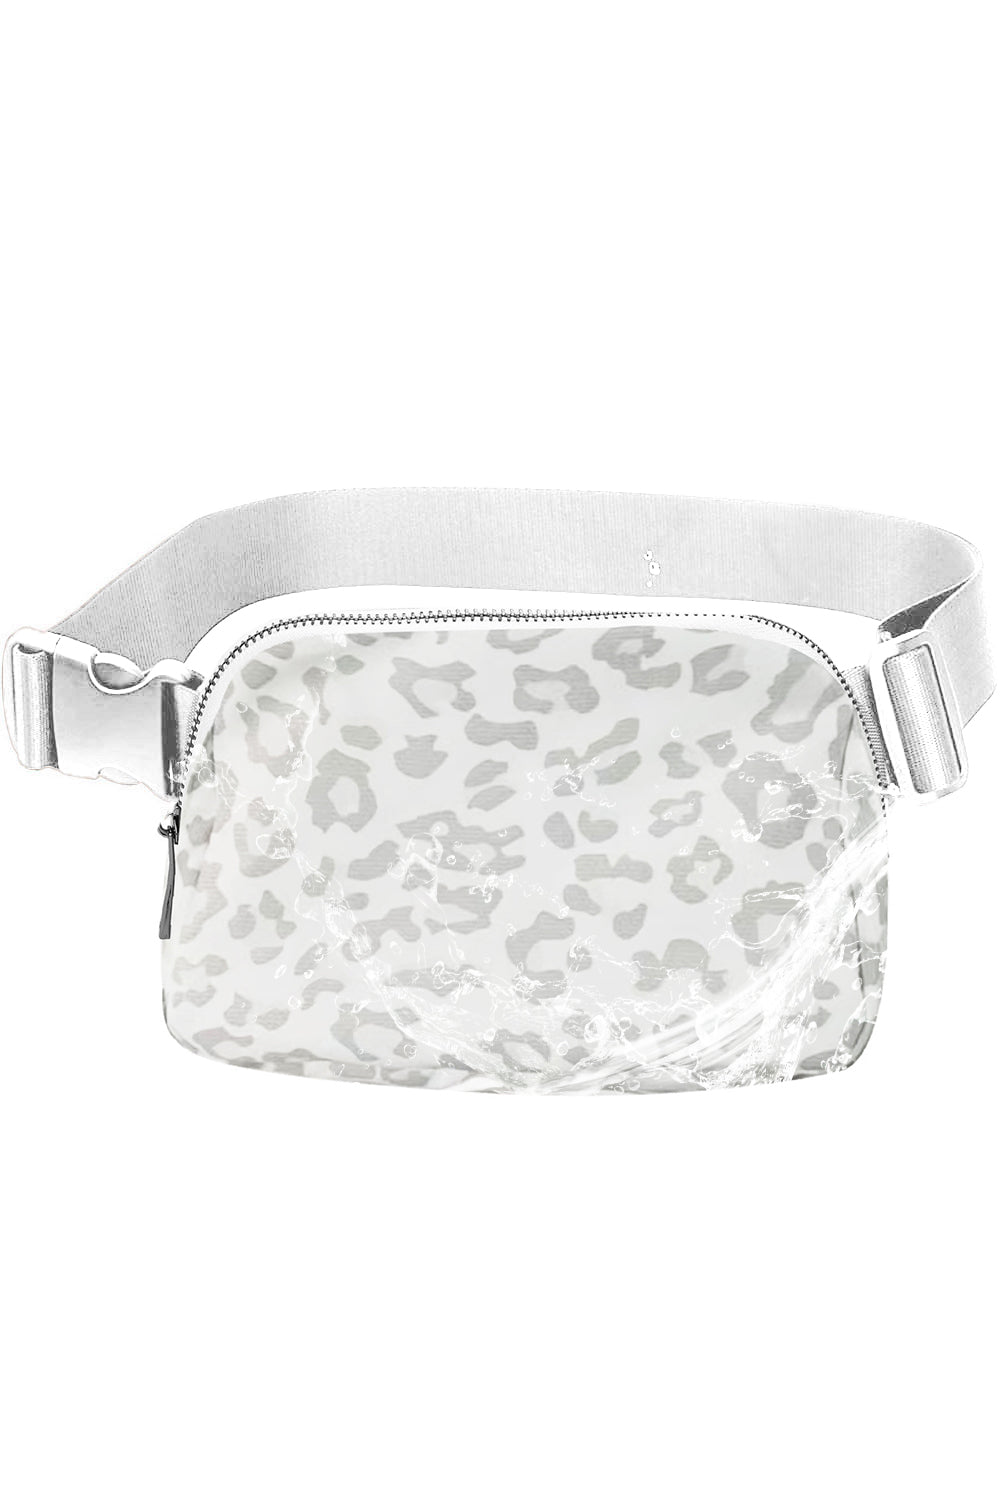 White 20*5*14cm Leopard Print Buckle Canvas Waist Pack Belt Bag